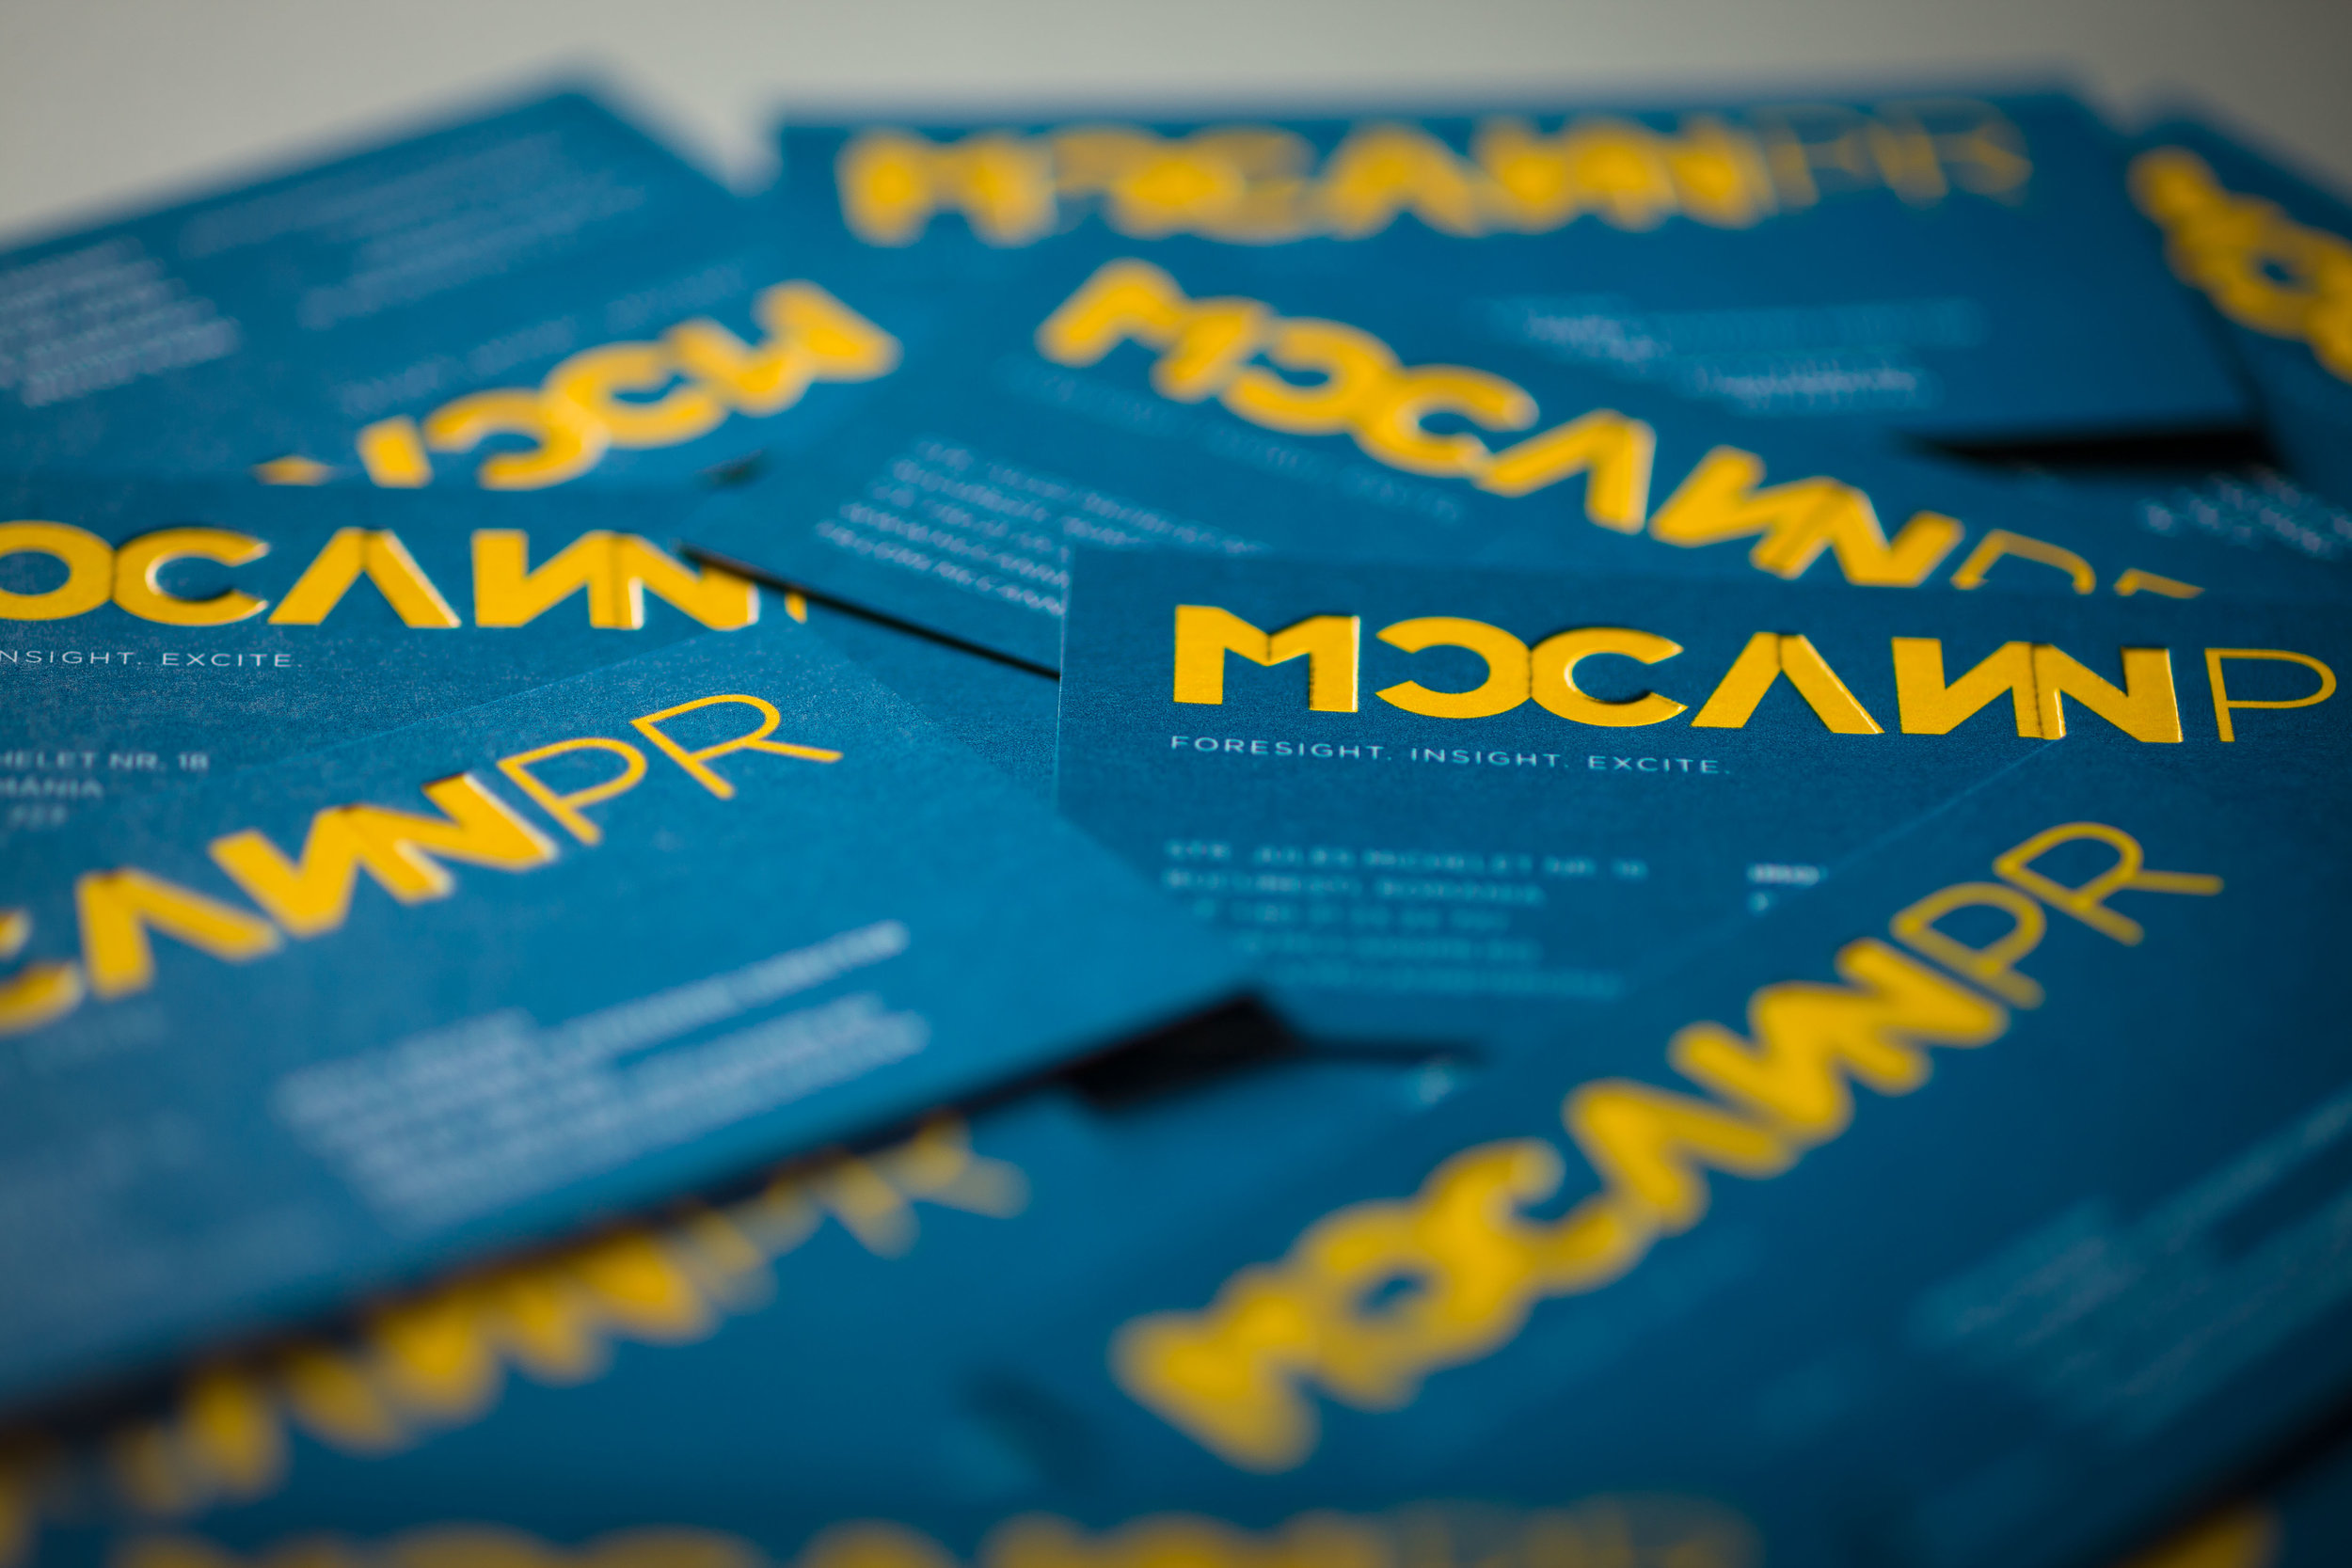 MCCANNPR_business_cards.jpeg